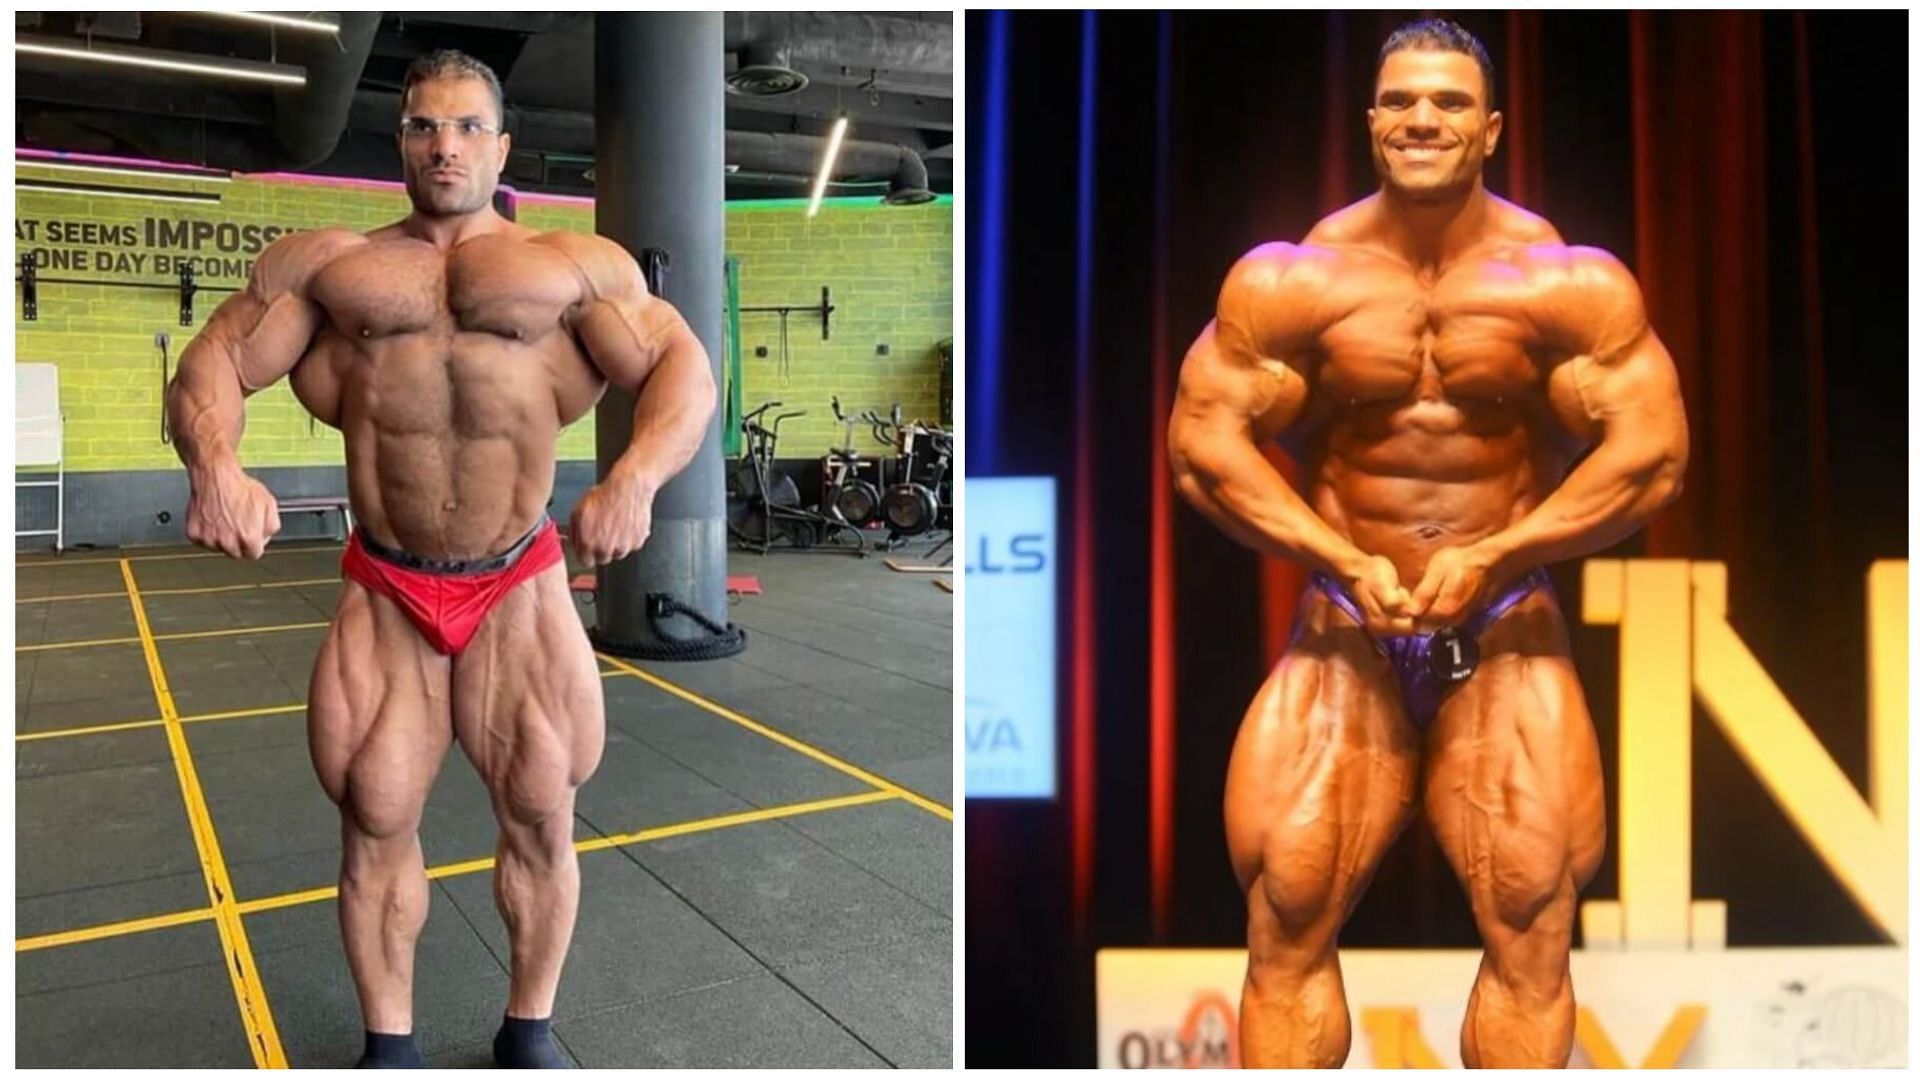 Hassan Mostafa flexing his muscular body